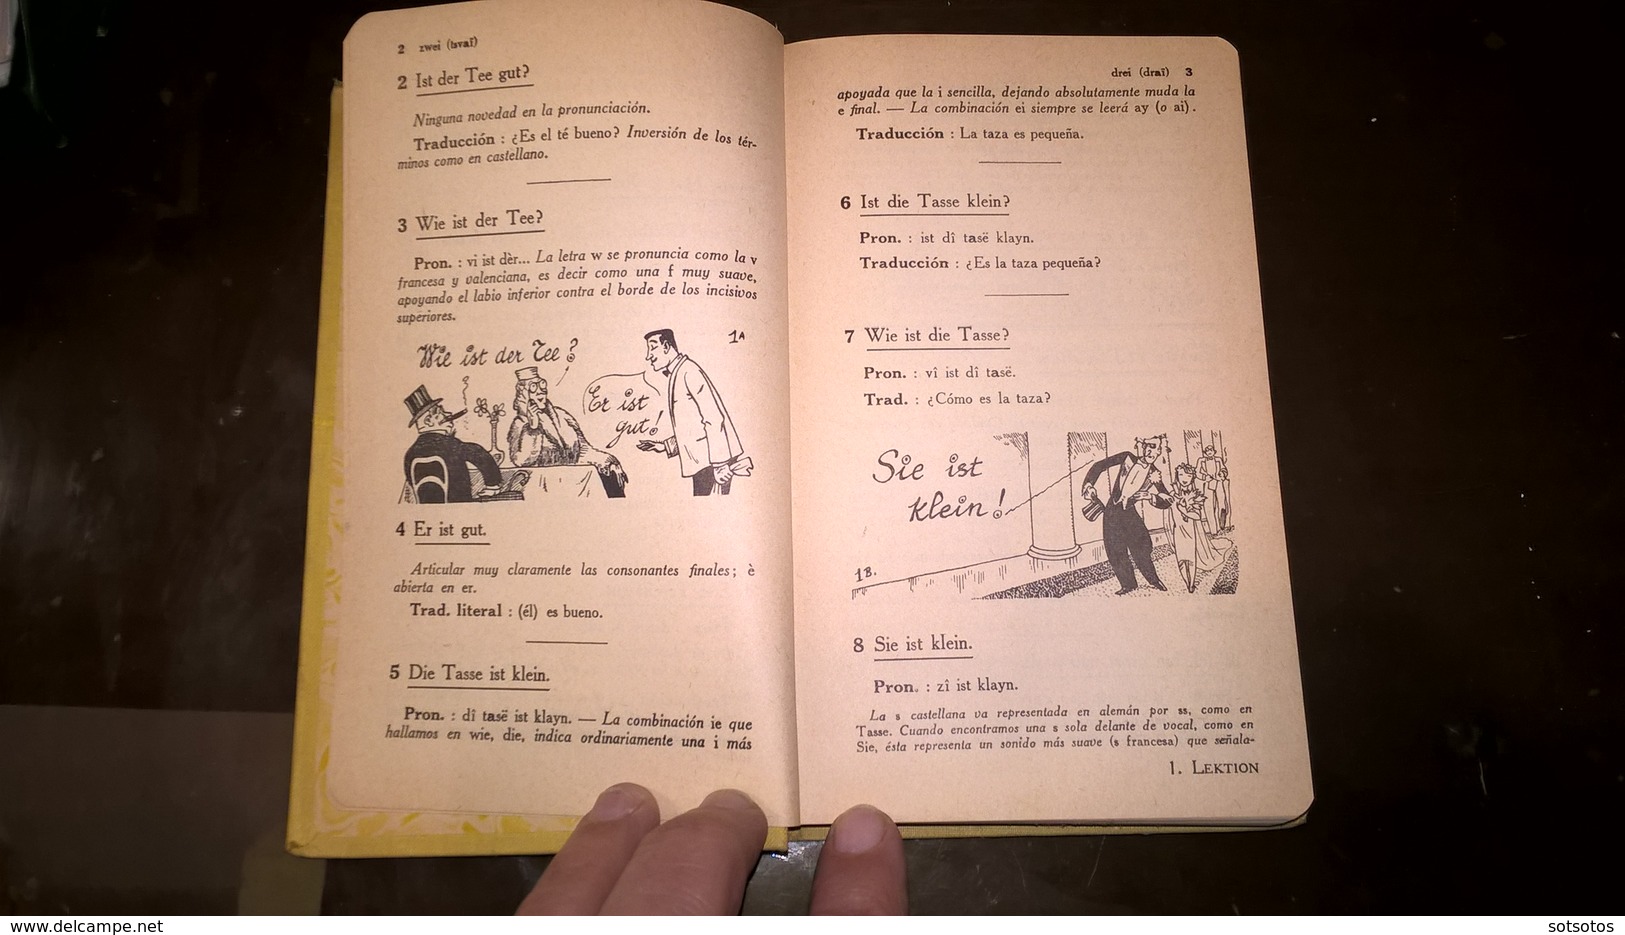 EL ALEMAN Sin ESFUERZO Por A. CHEREL - METODO DIARIO ASSIMIL - PARIS (1959) - 376 Pages (11,50x18 Cent) - IN VERY GOOD - Opere Linguistiche